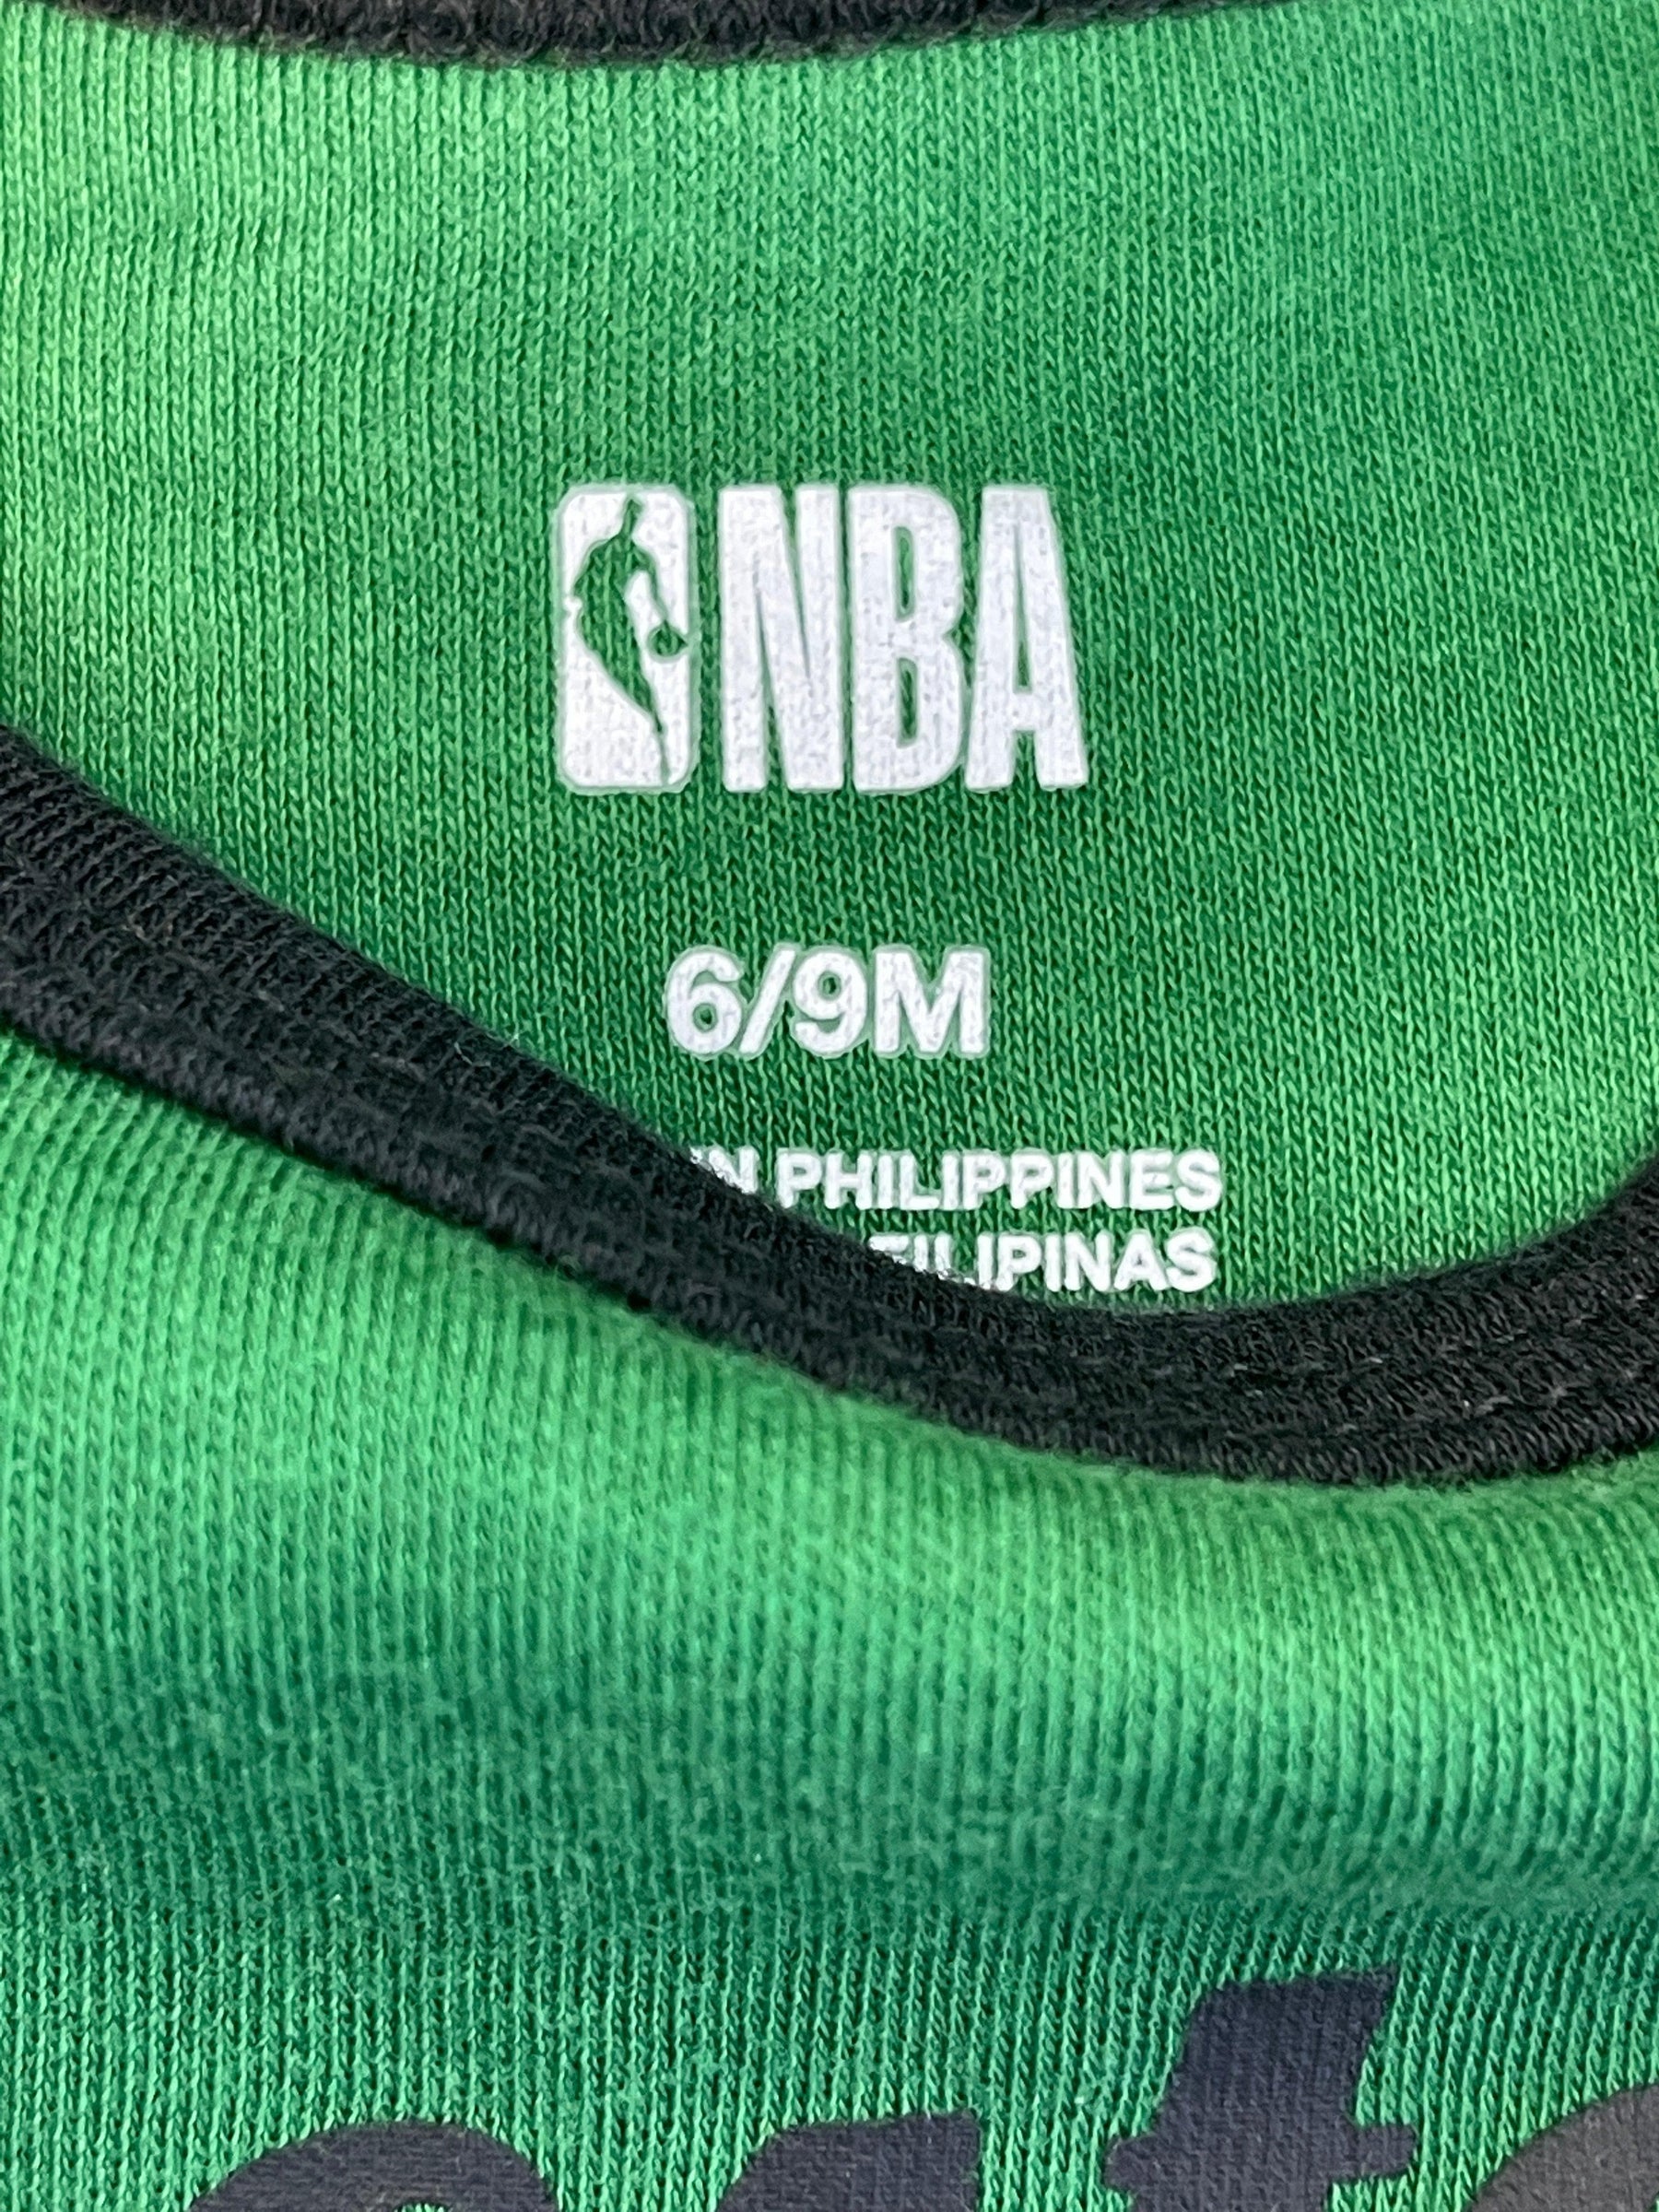 NBA Boston Celtics Green Bodysuit 6-9 months